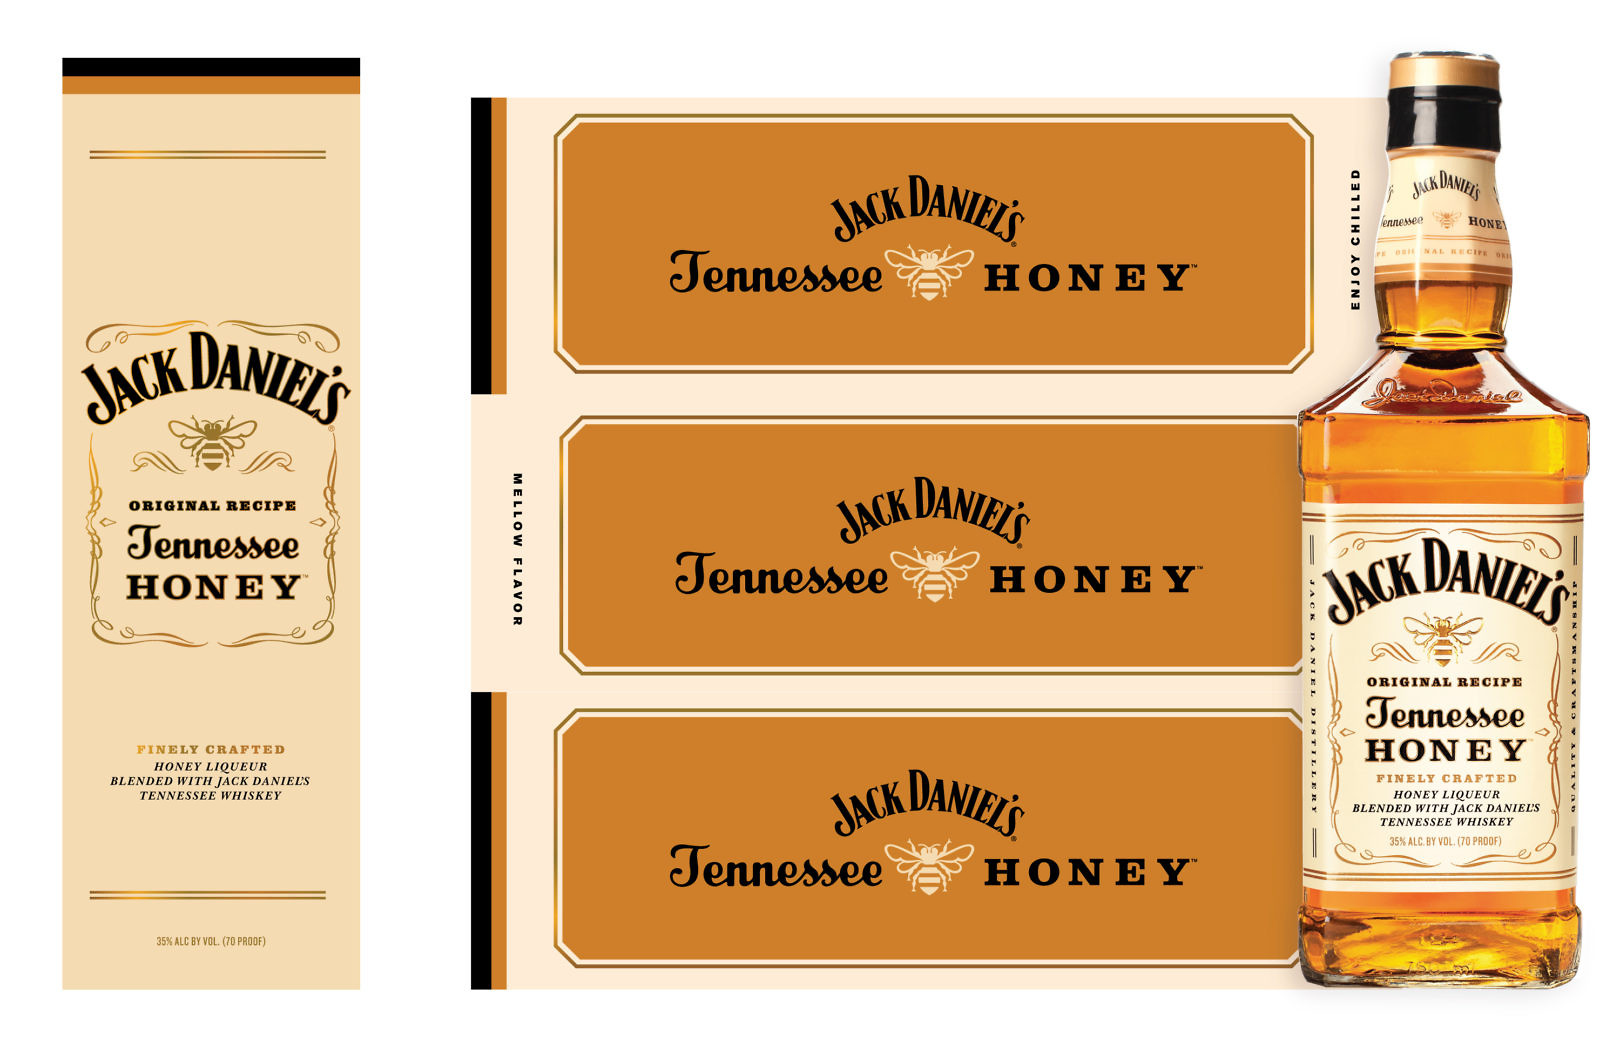 Jack Daniels Tennessee Honey box 